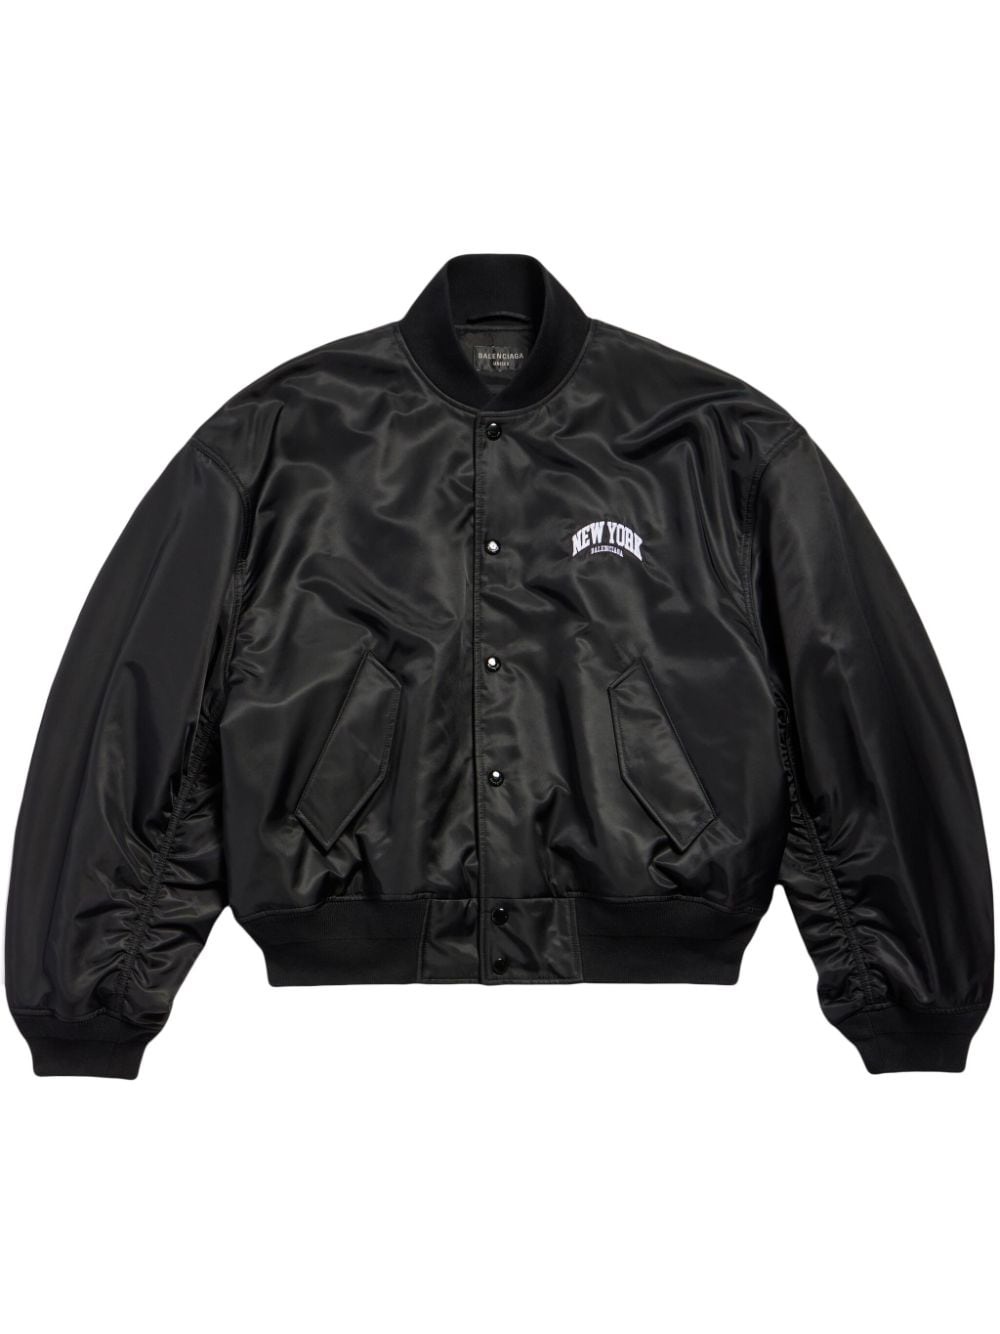 New York-embroidery bomber jacket - 1